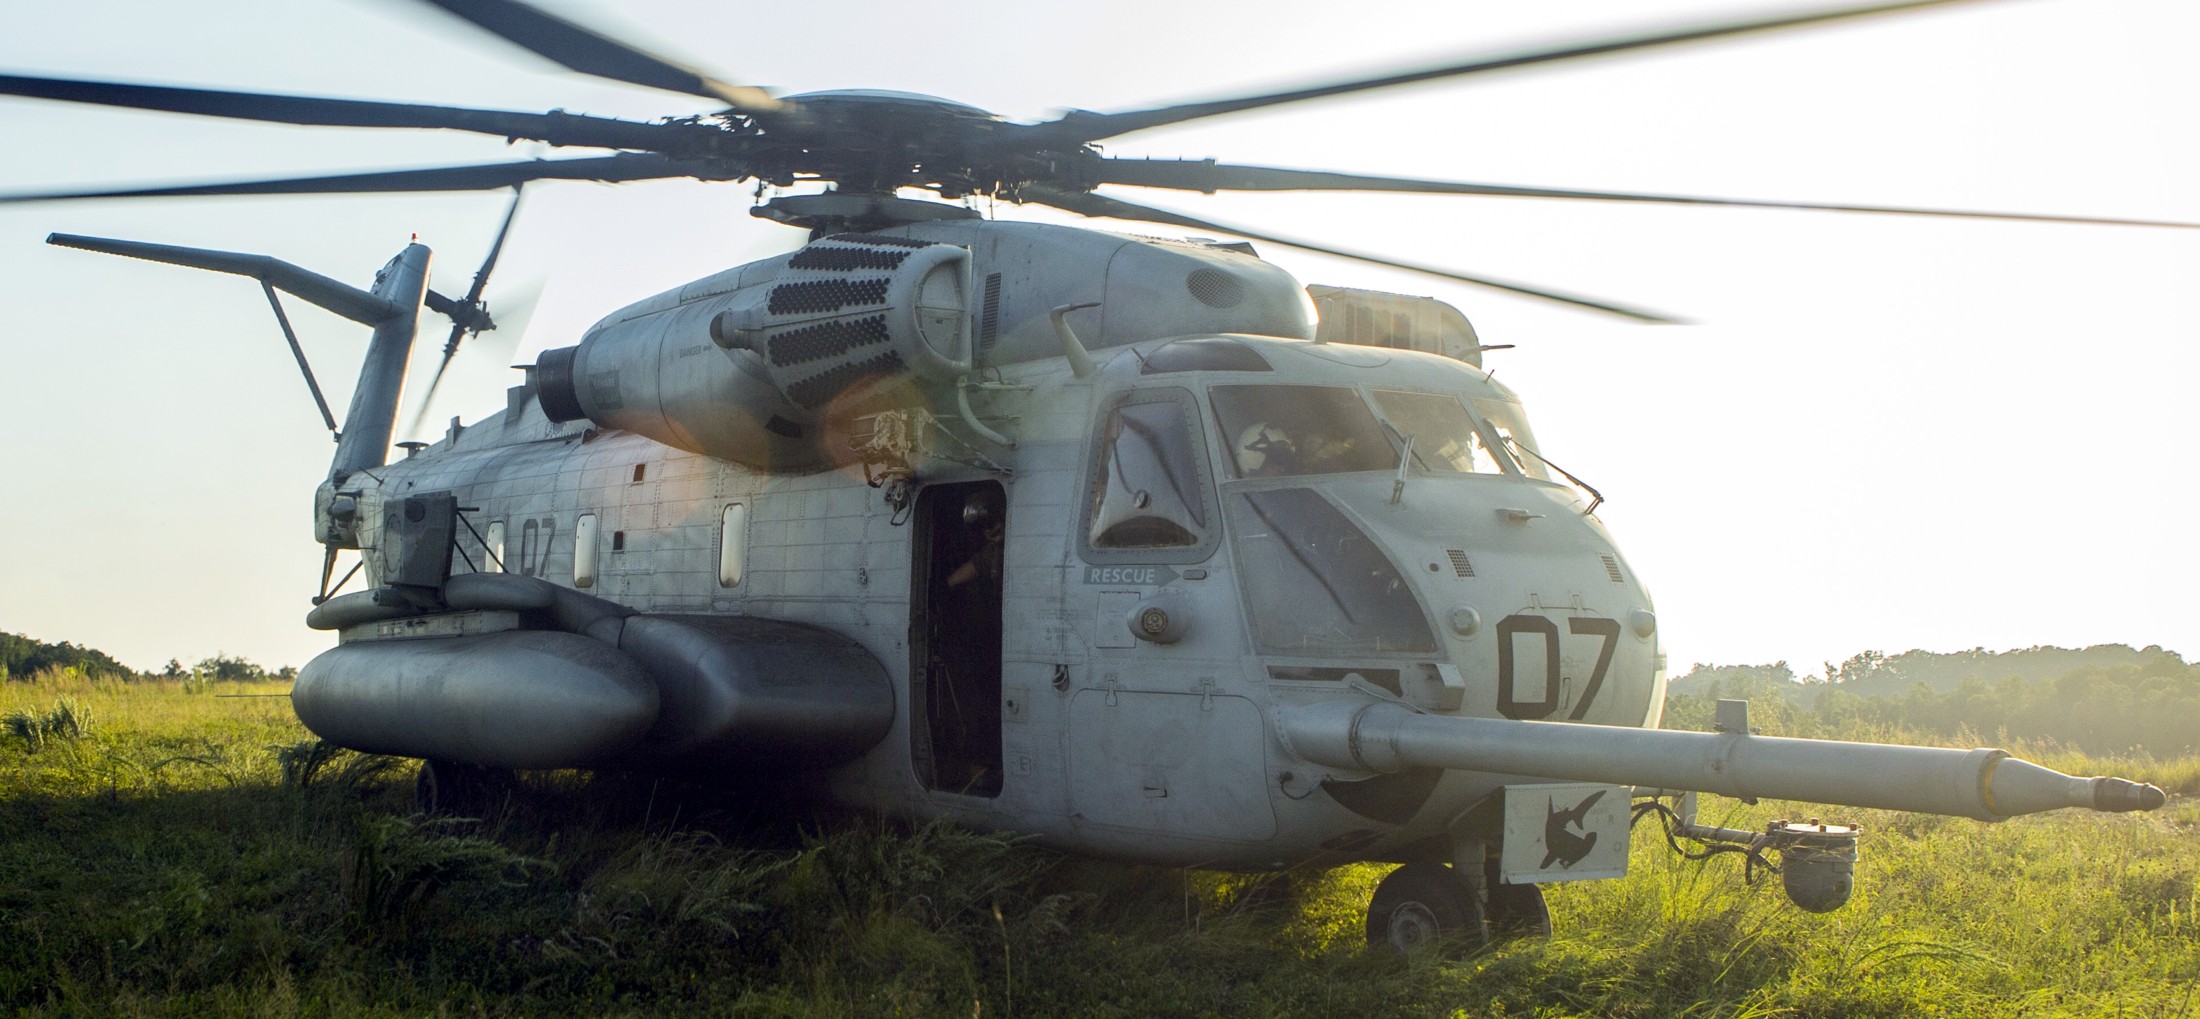 hmh-366 hammerheads marine heavy helicopter squadron usmc sikorsky ch-53e super stallion 93